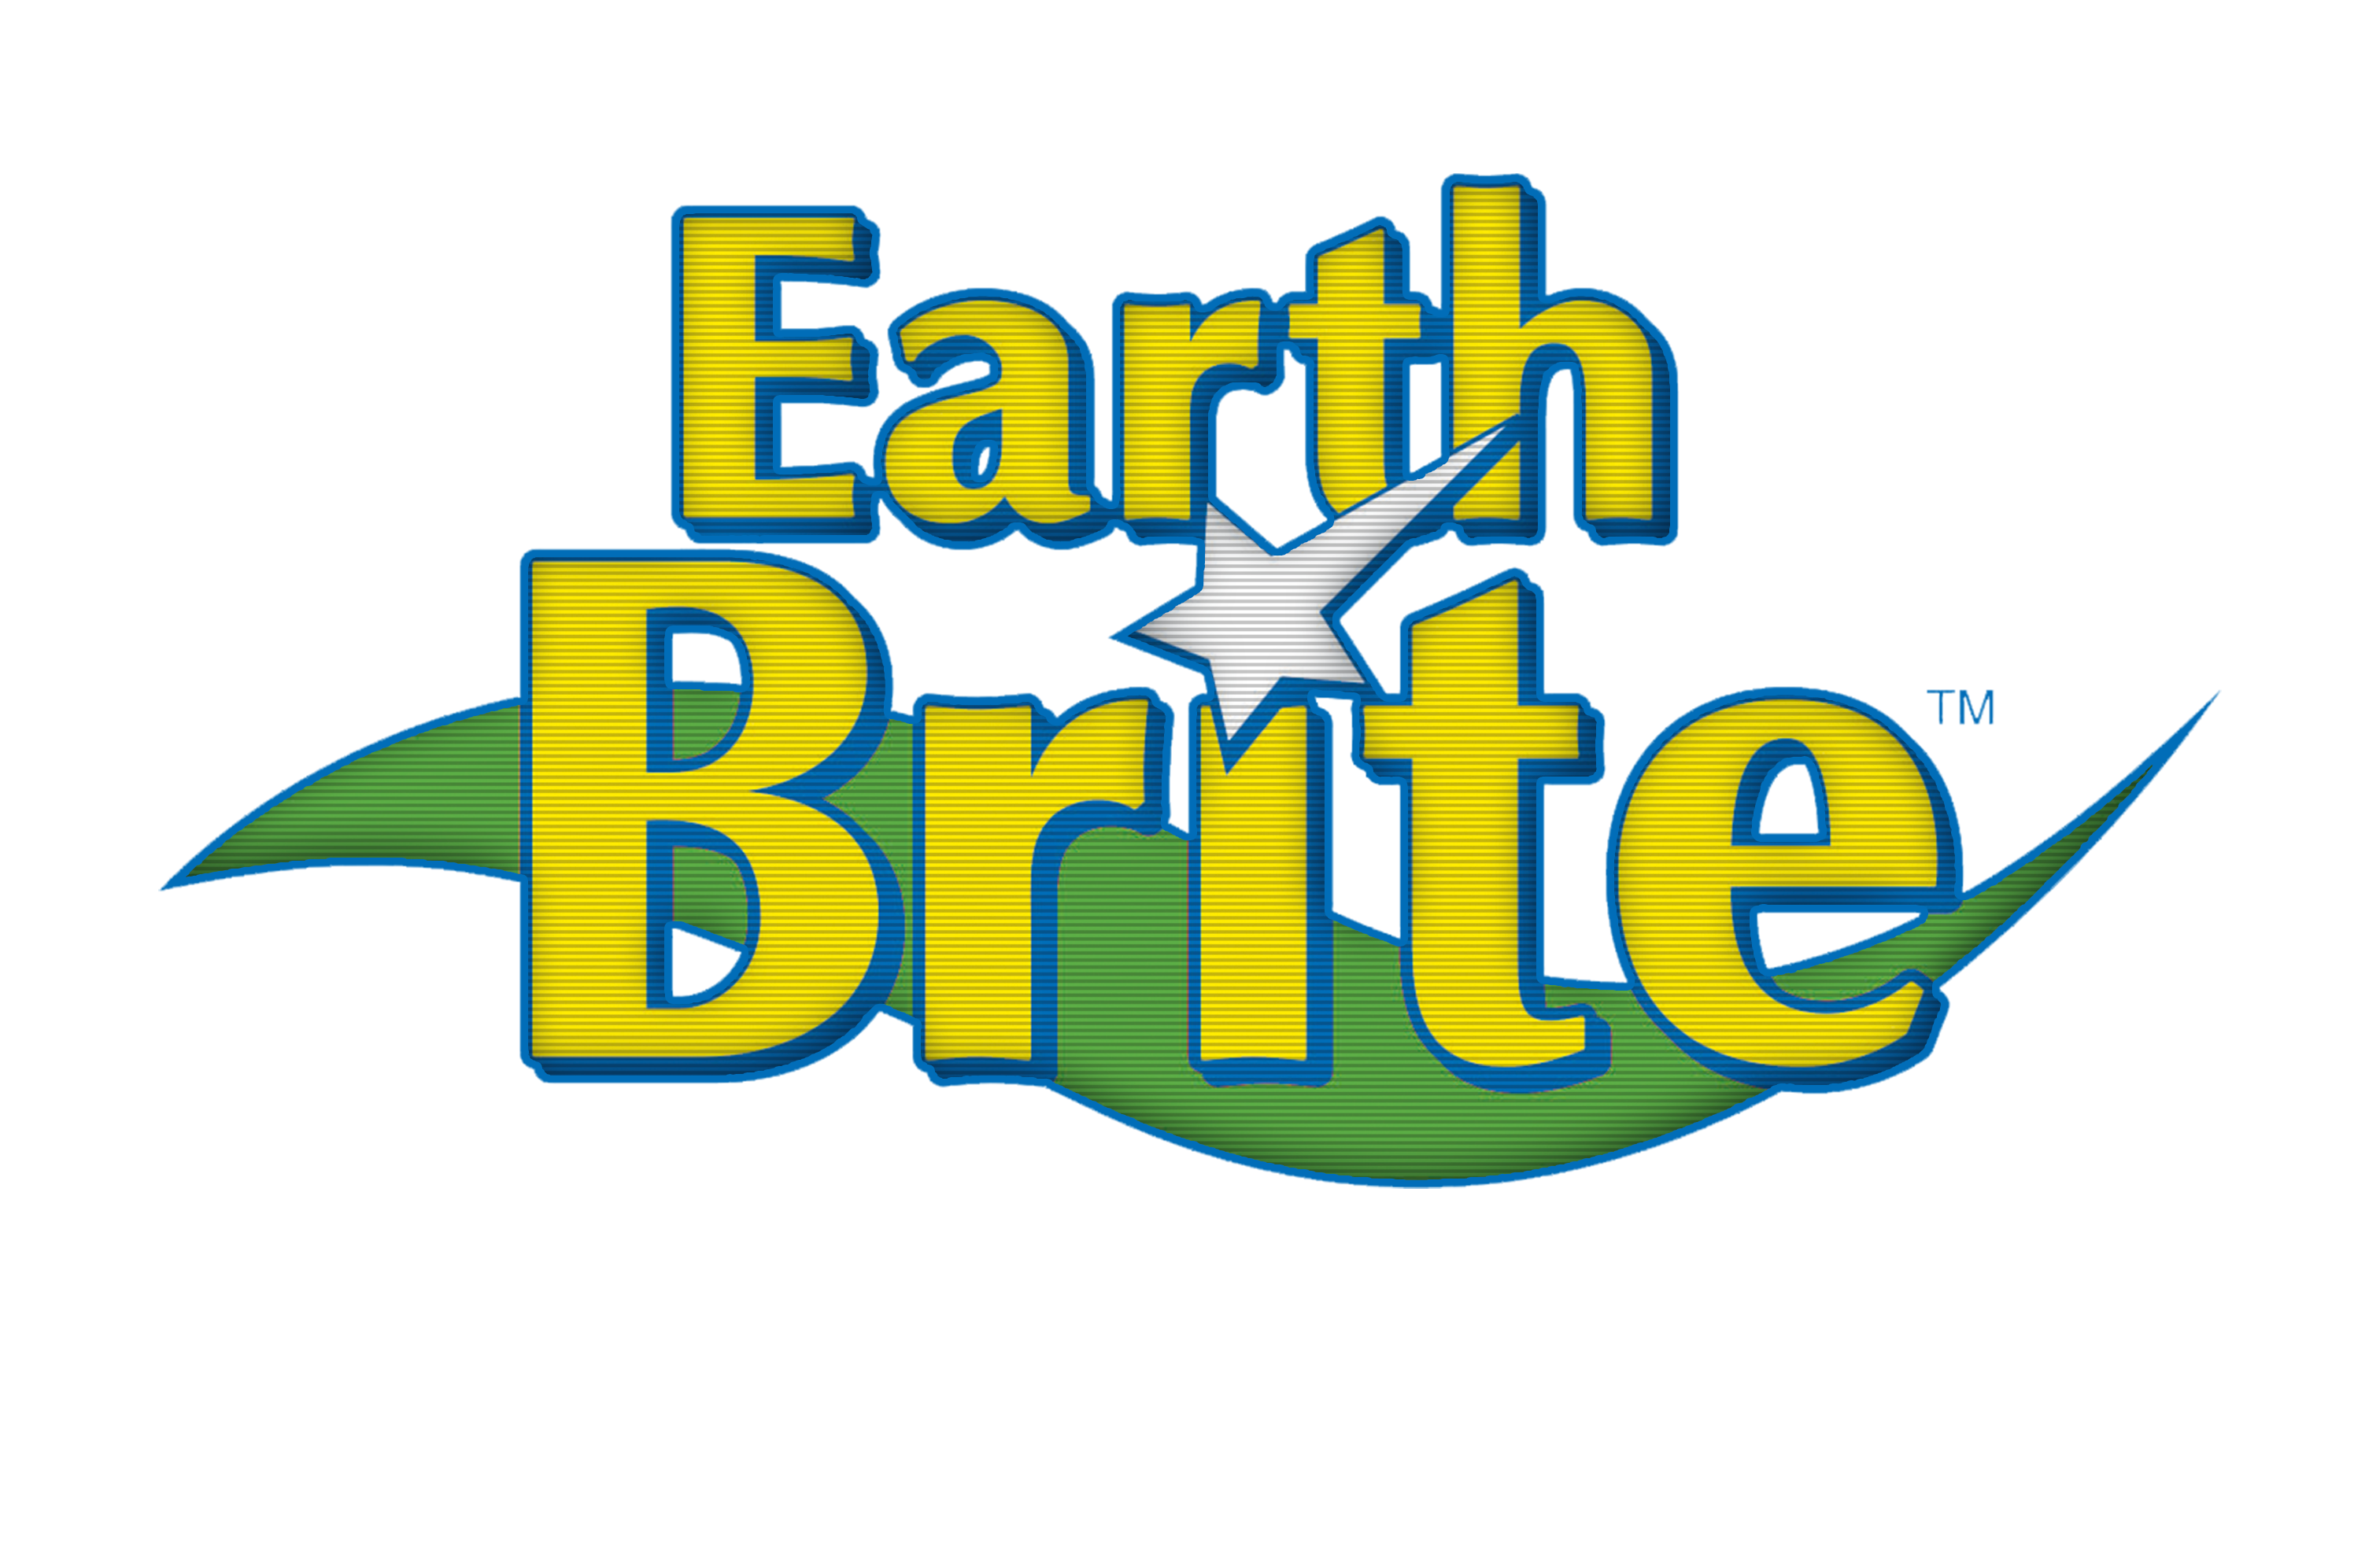 EarthBrite